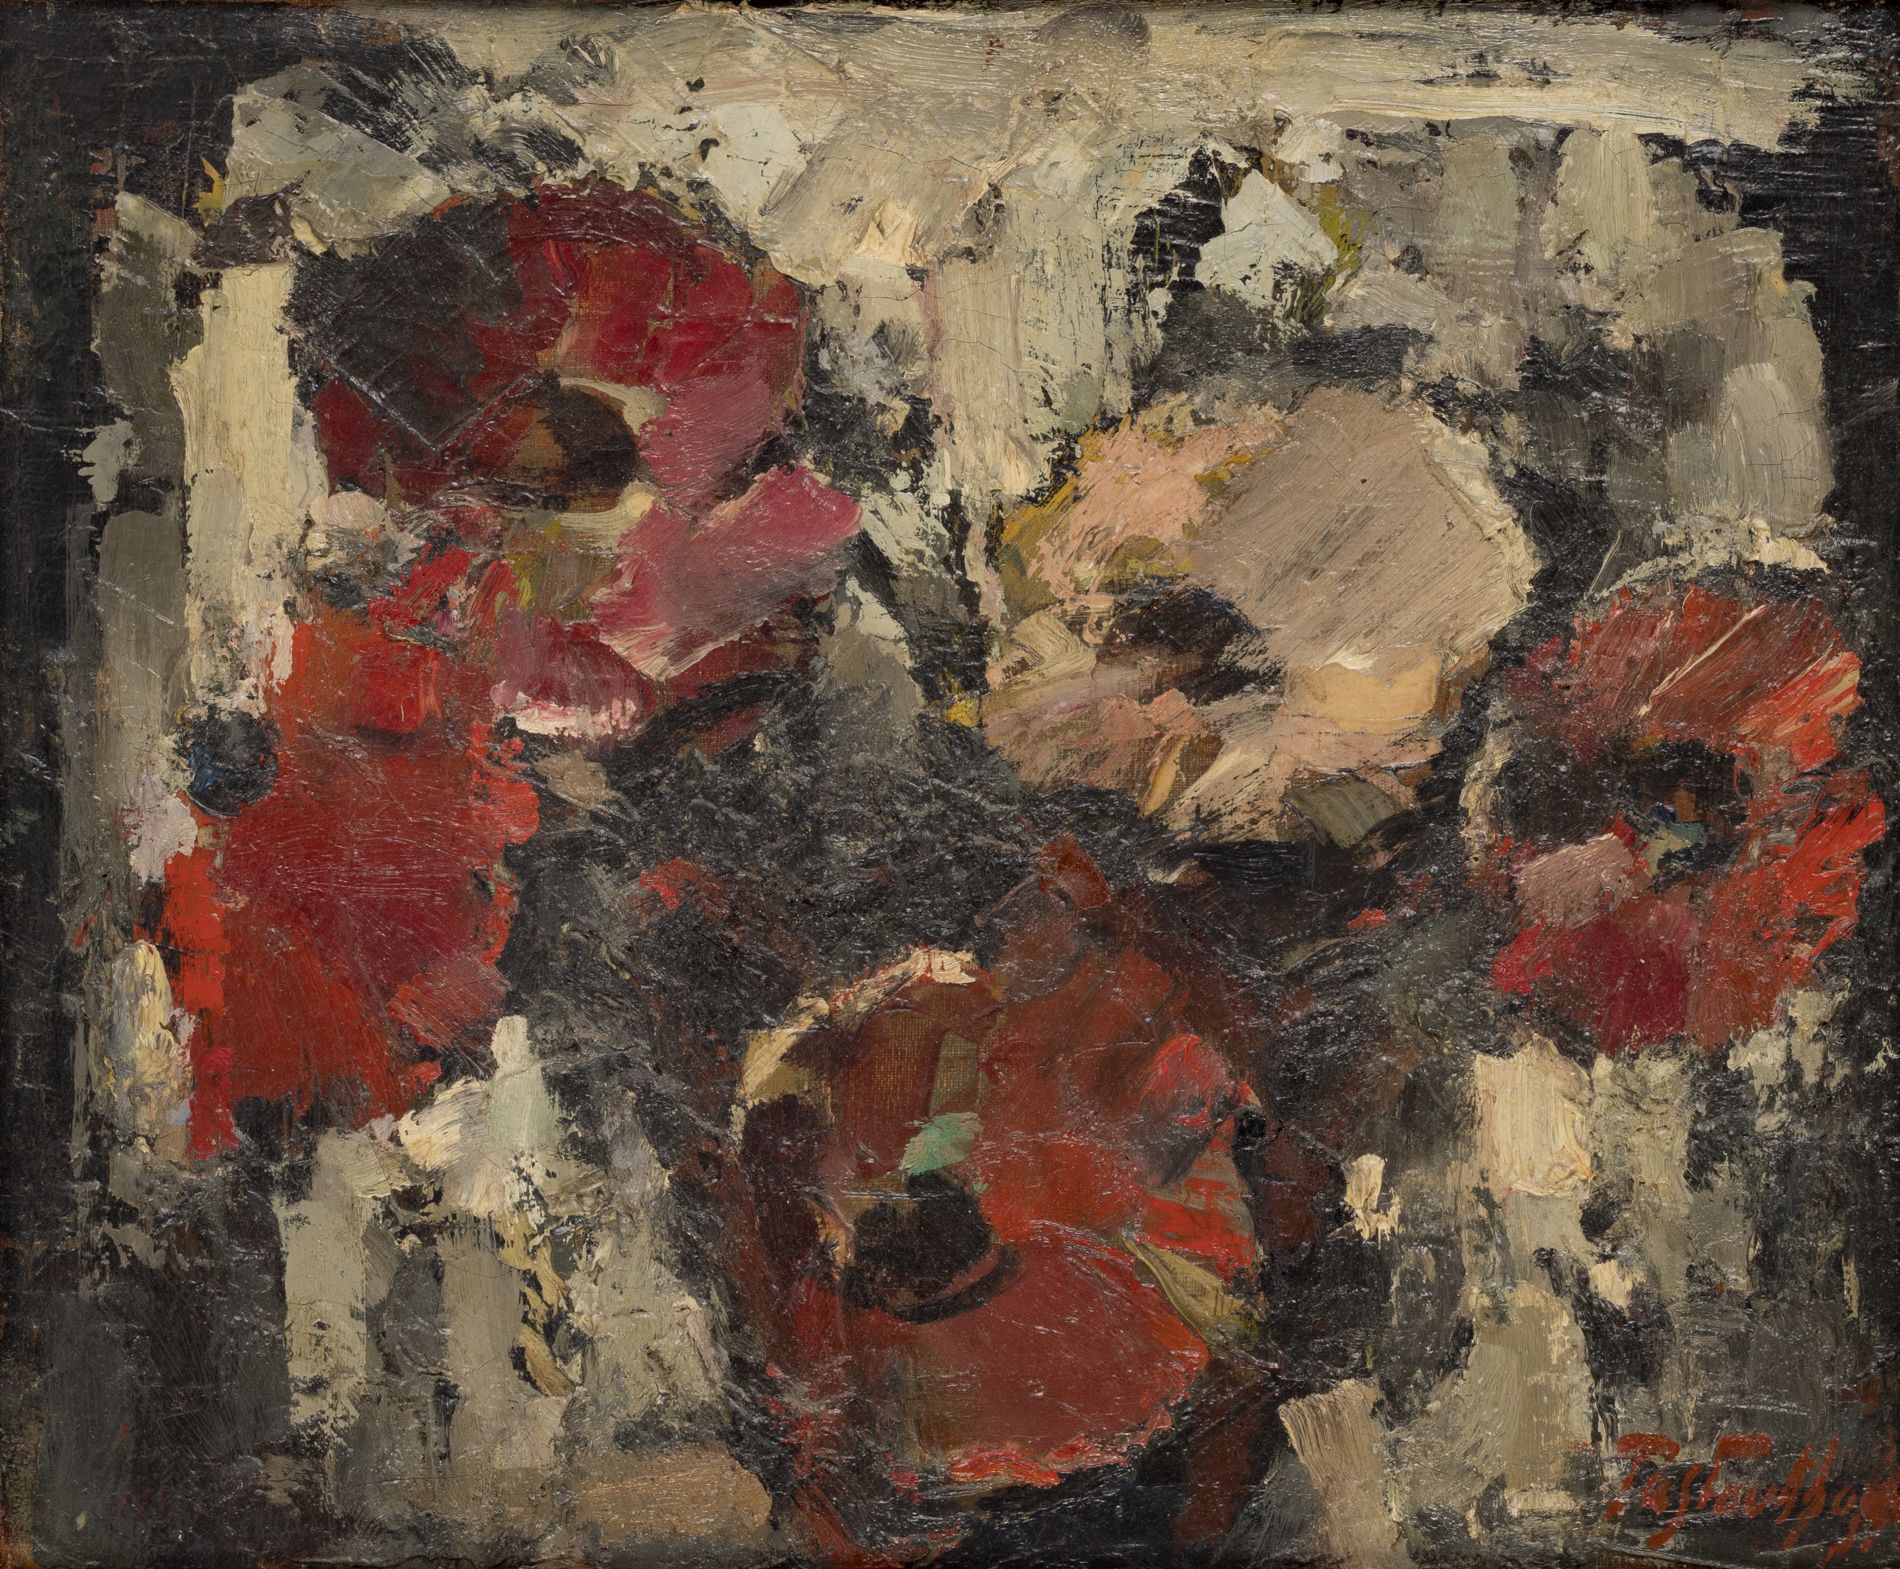 Null 鲍里斯-帕斯托克霍夫 (1894-1974)
罂粟花的静物
布面油画，右下方有签名。 
尺寸：37.5 x 46 cm